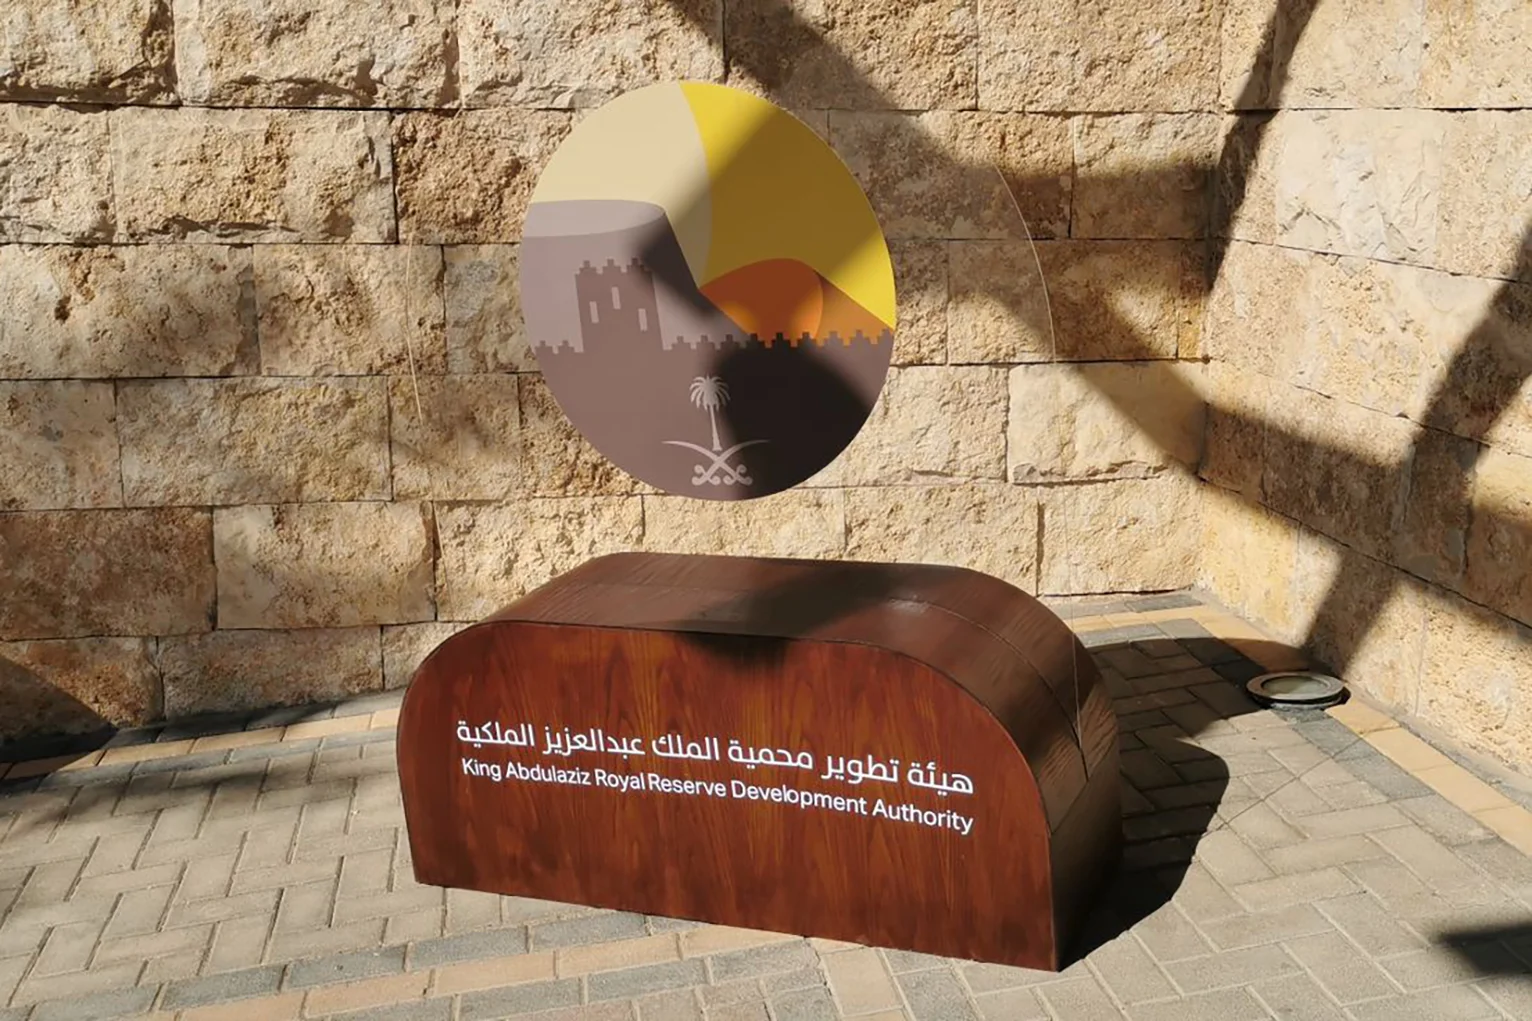 The Annual Day of The King Abdulaziz Reserve Development Authority